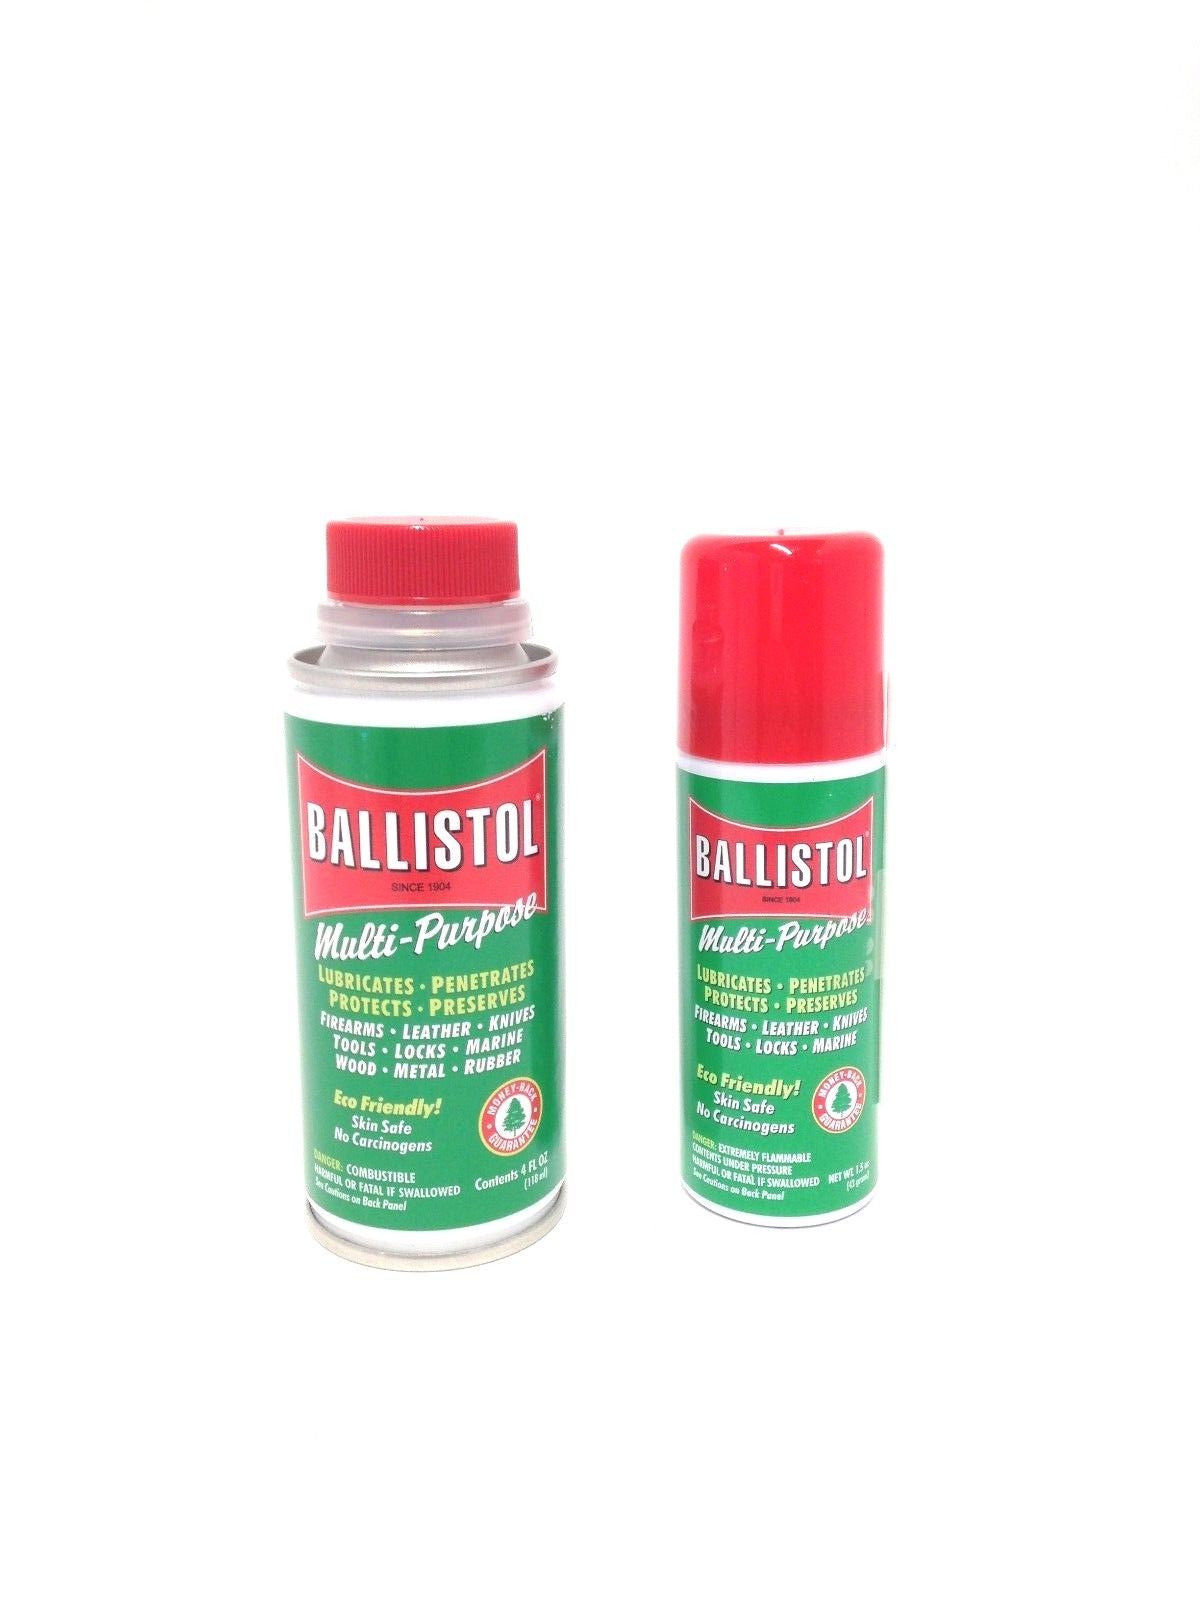 Ballistol Multi-Purpose Oil - Cleans, Lubricates & Protects - 1.5 oz.  Aerosol Can